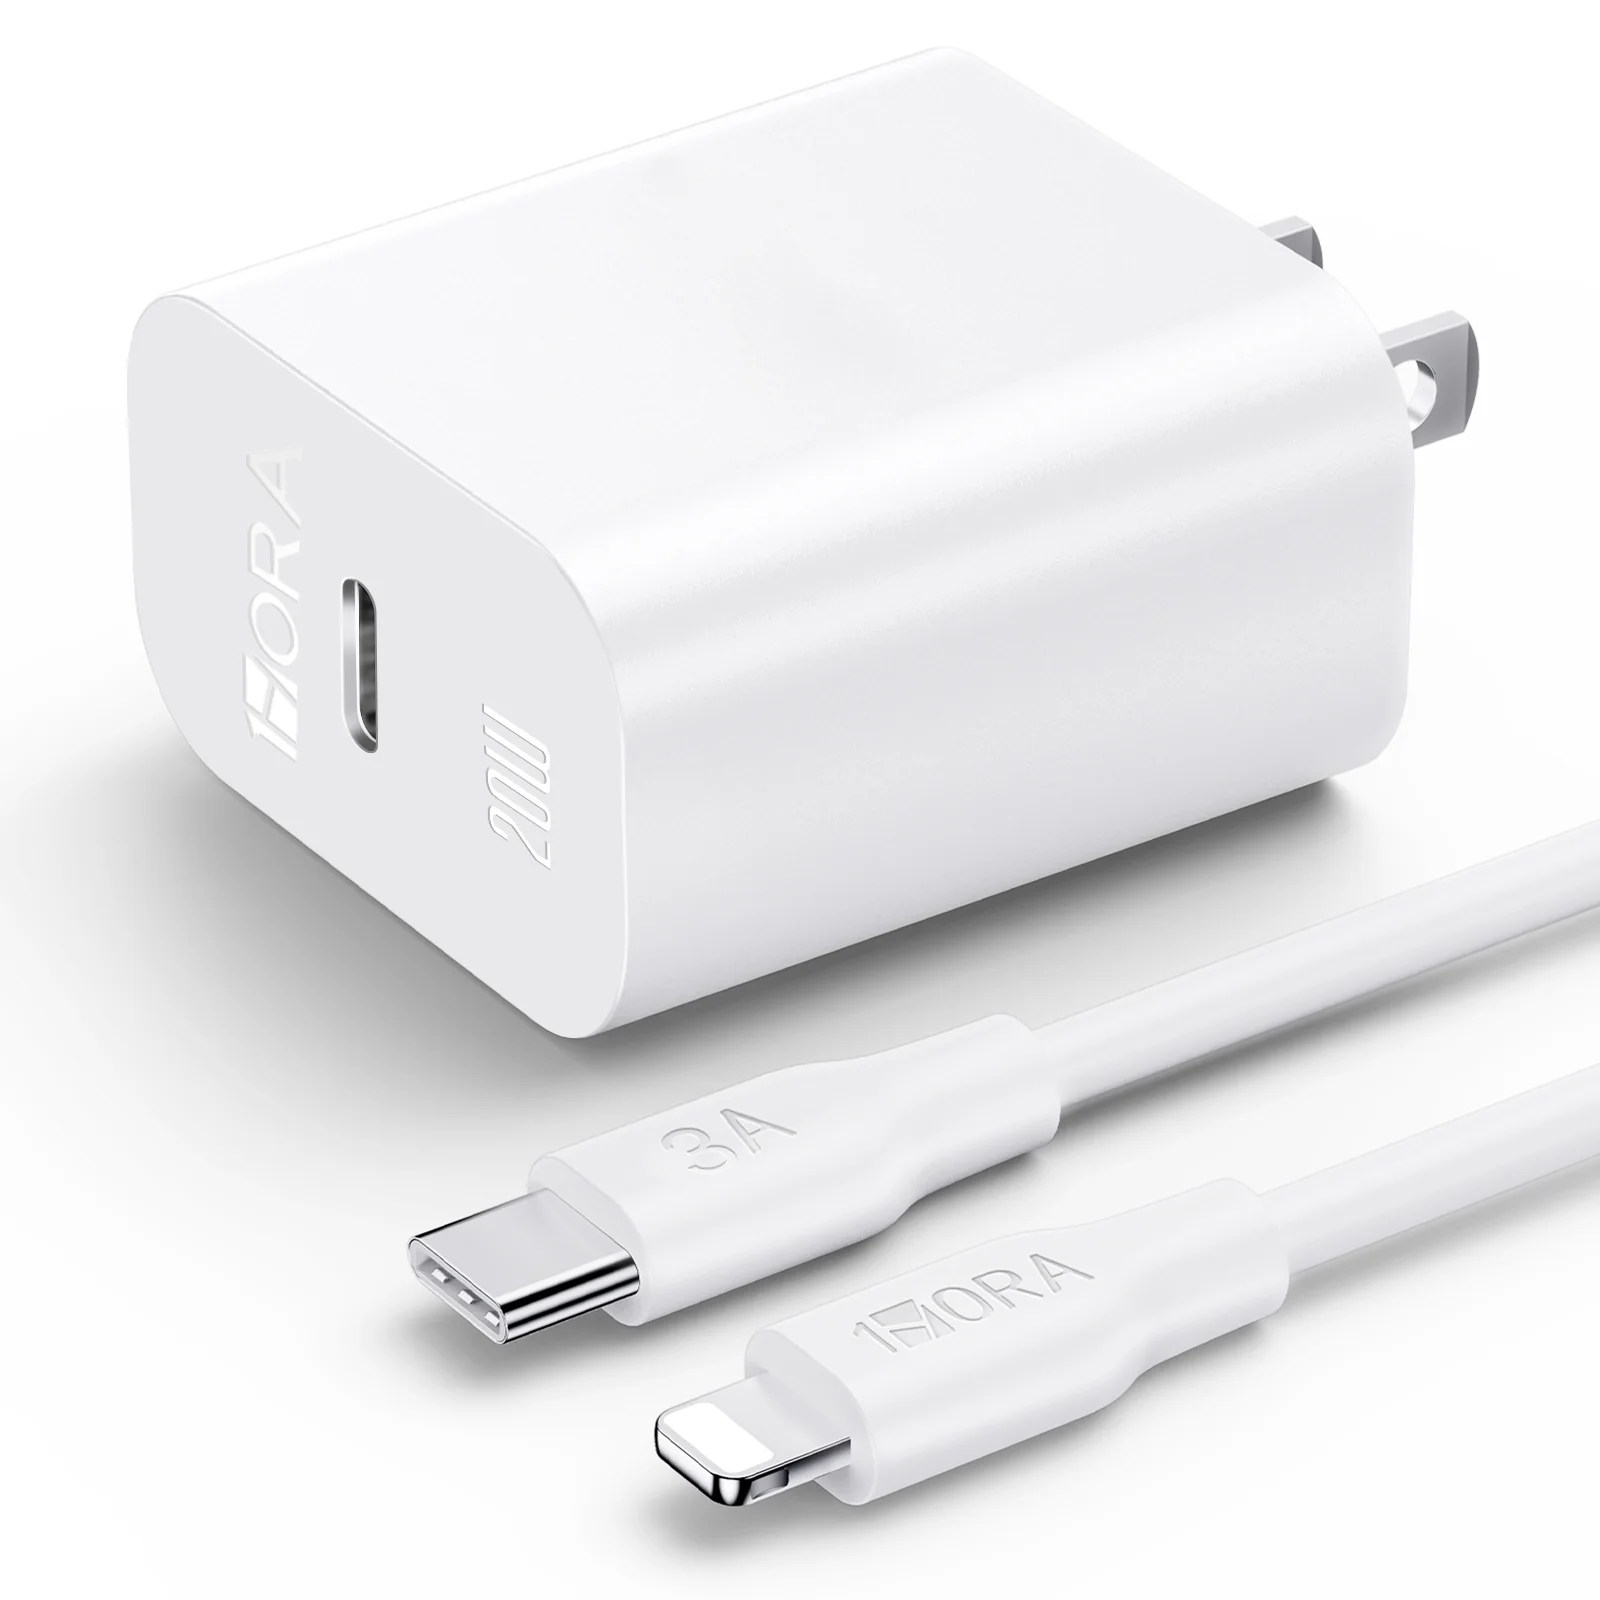 Ingreeka Cargador iPhone Carga Rapida, 20W Cargador USB C Enchufe Rapido  con 2M Cable Compatible with